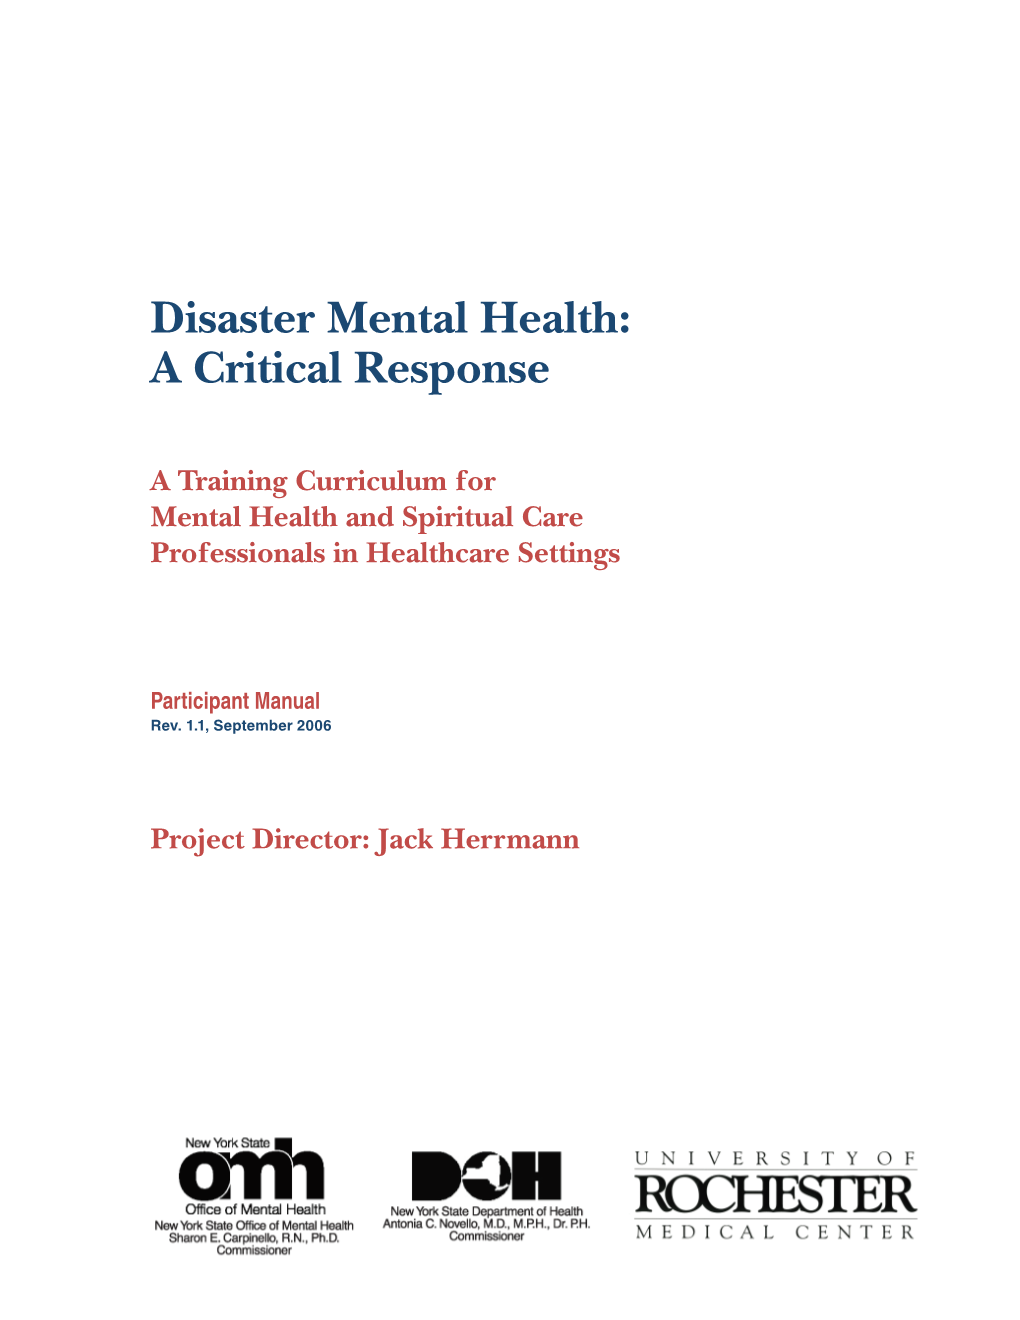 Disaster Mental Health: a Critical Response